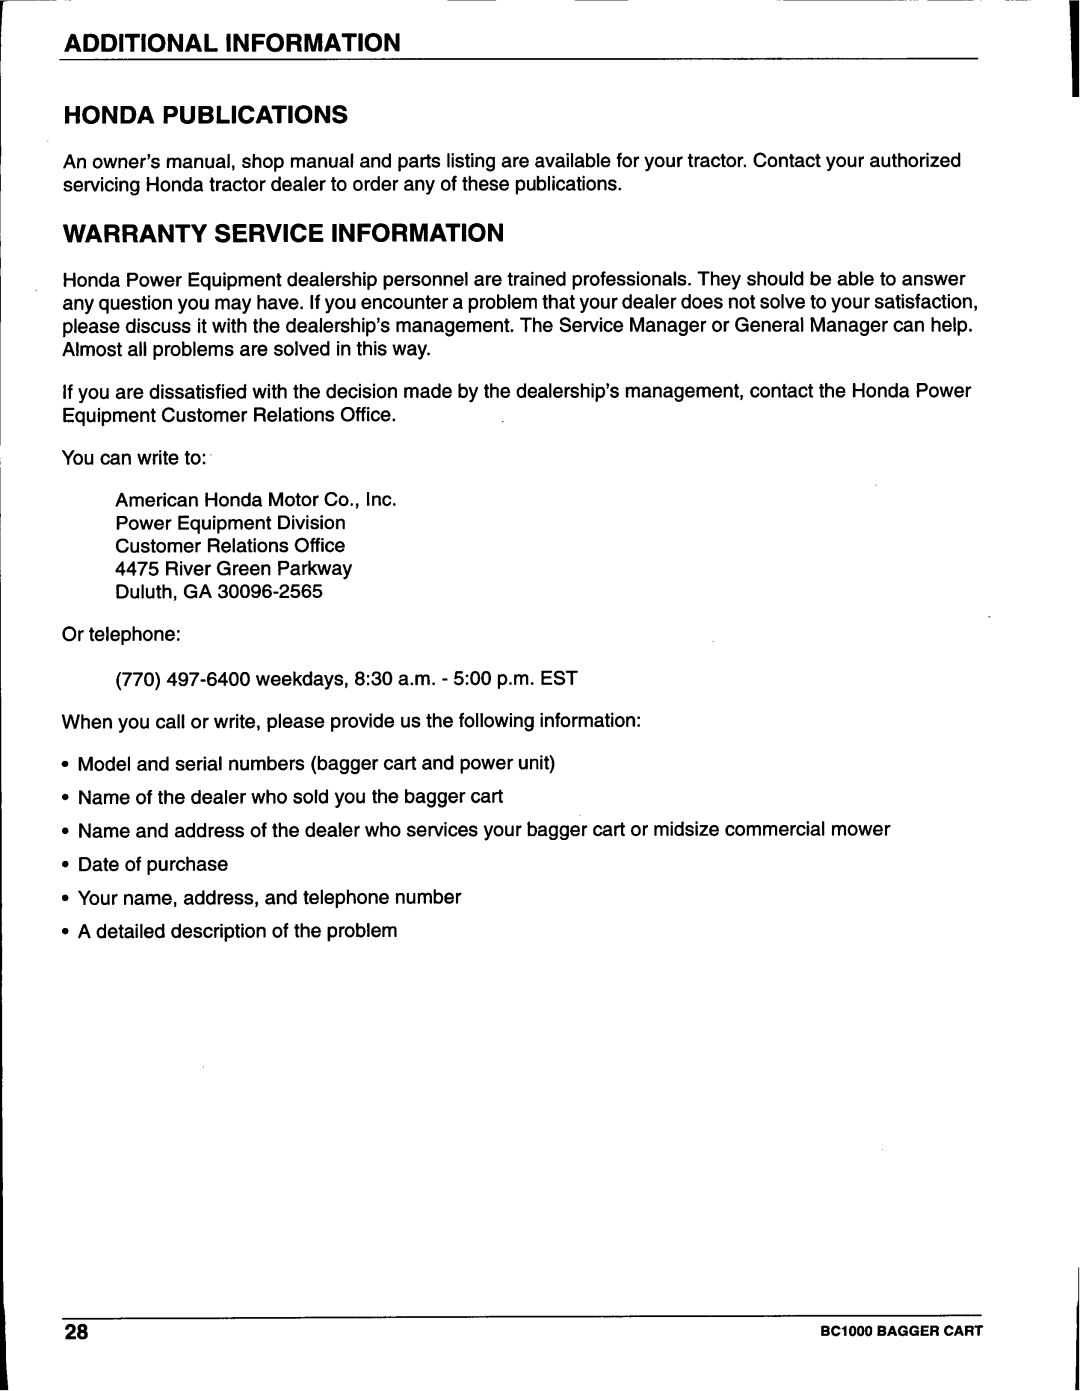 Honda Power Equipment BC100 manual Additional Information Honda Publications, Warranty Service Information 